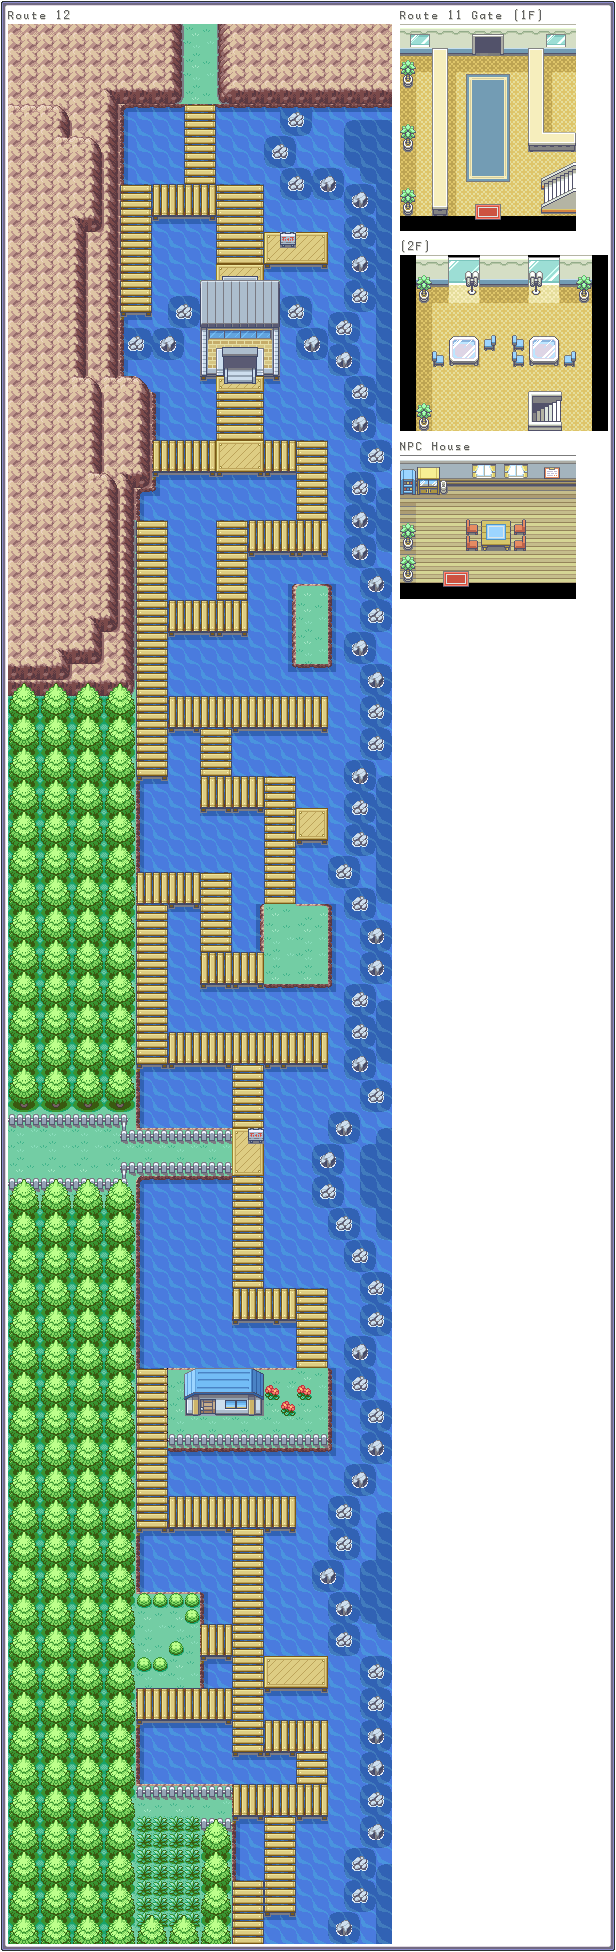 Pokémon FireRed / LeafGreen - Route 12